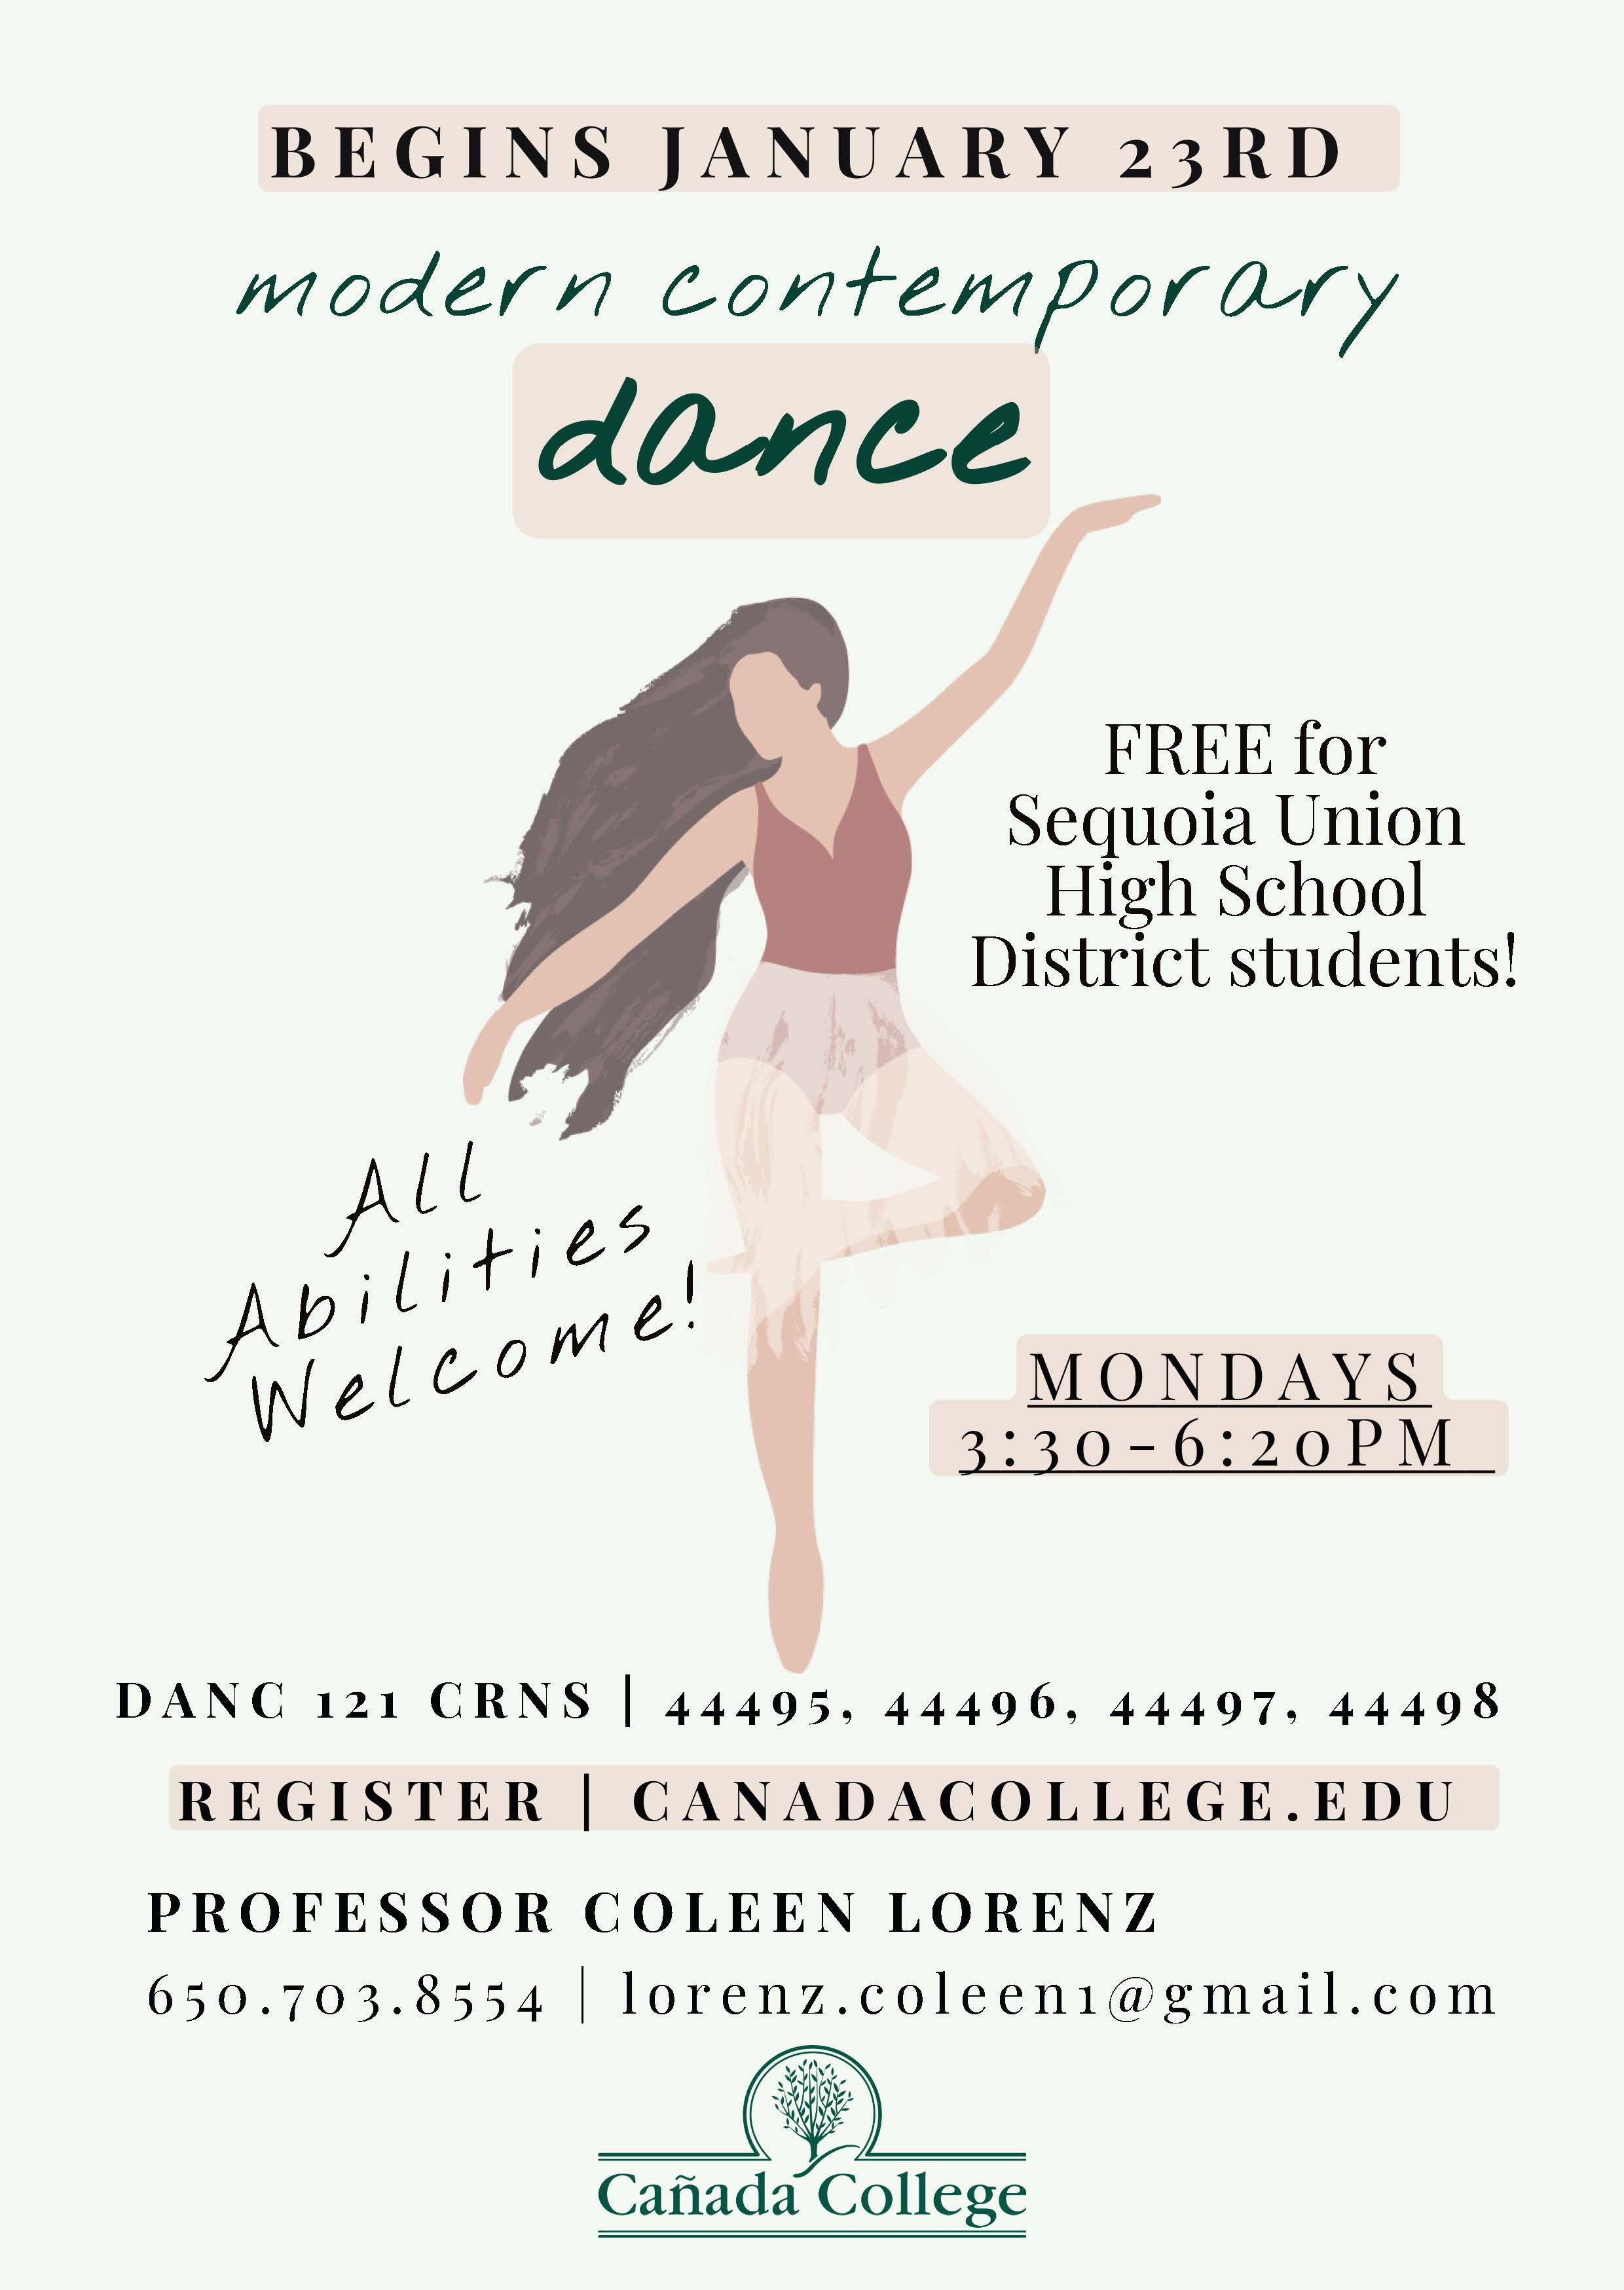 modern dance class information offered on Mondays